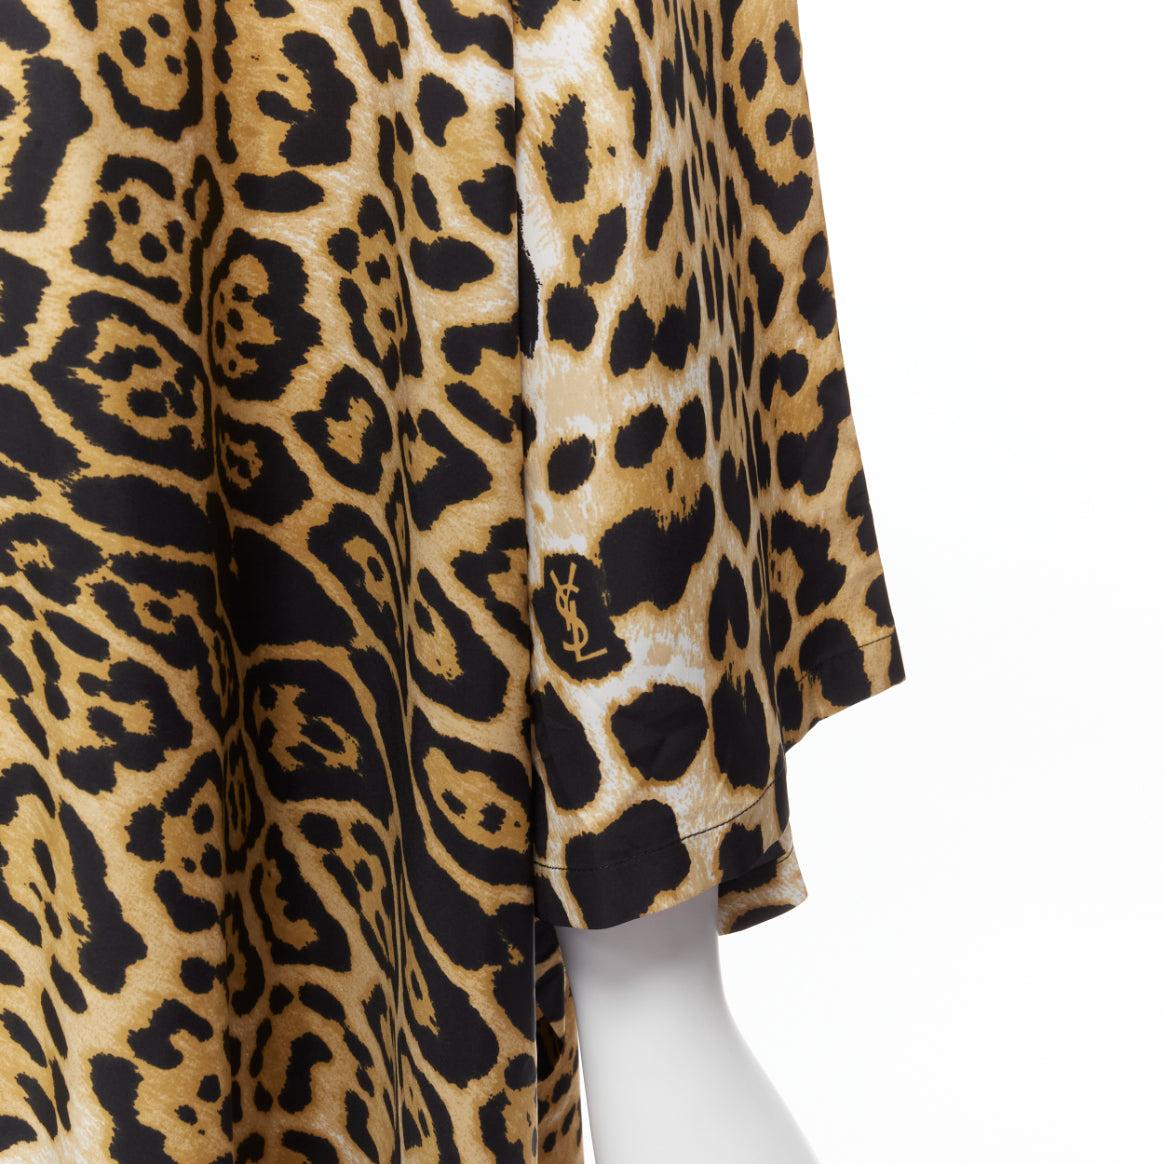 YVES SAINT LAURENT Stefano Pilati 2011 Vintage leopard spot hooded poncho FR36 S 3